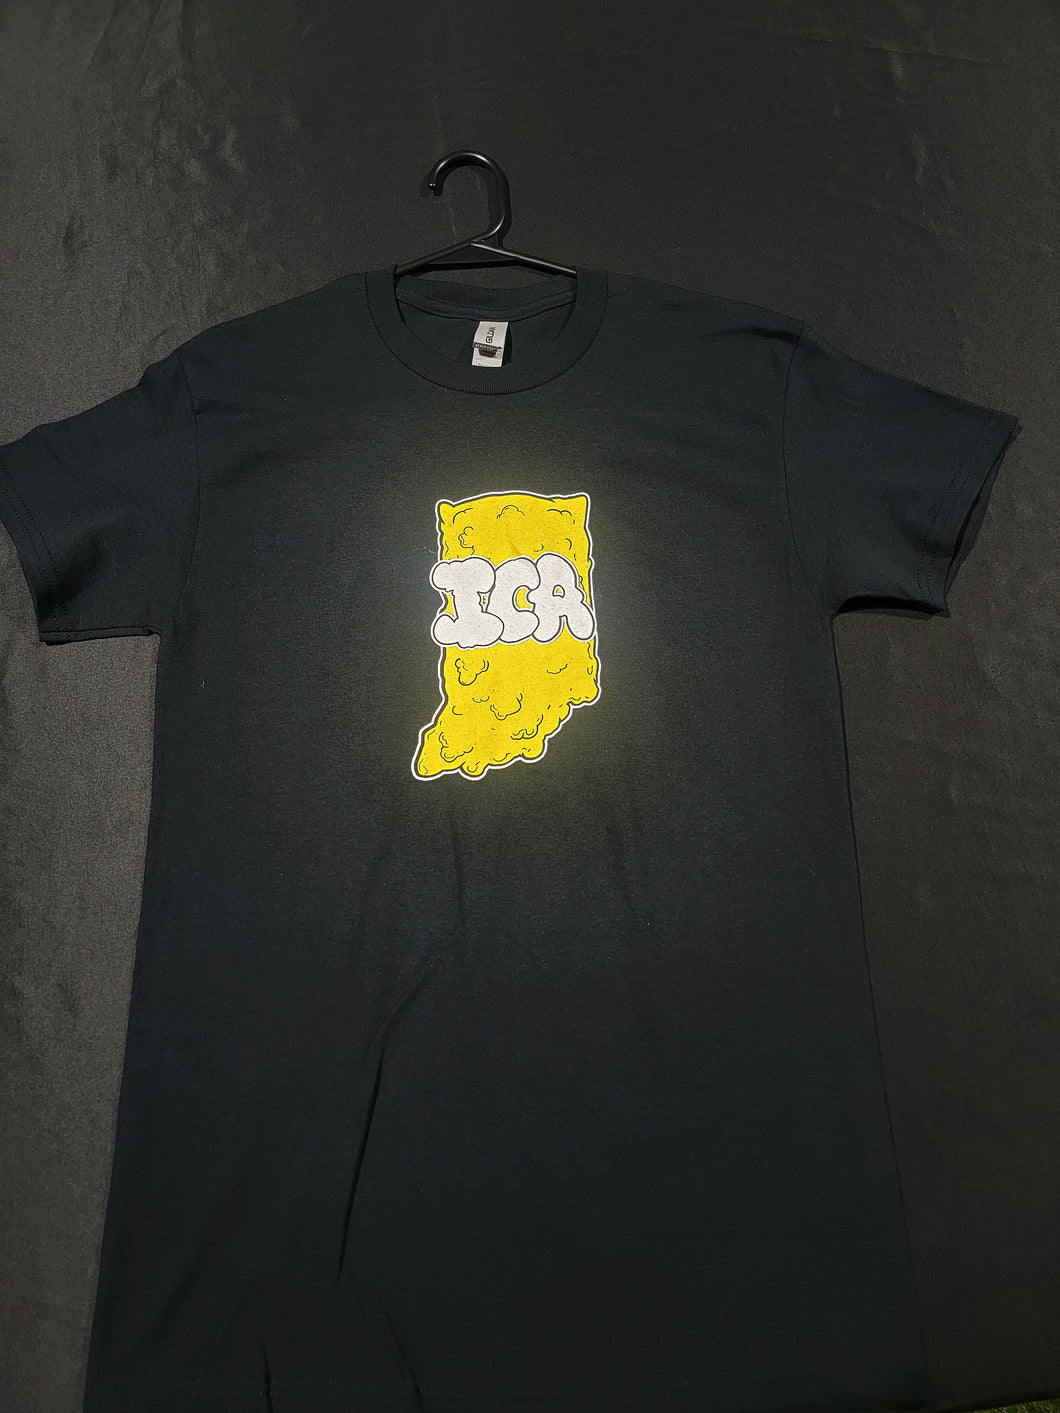 ICA (Indiana Cannabis Awards) 22' T-Shirt Small